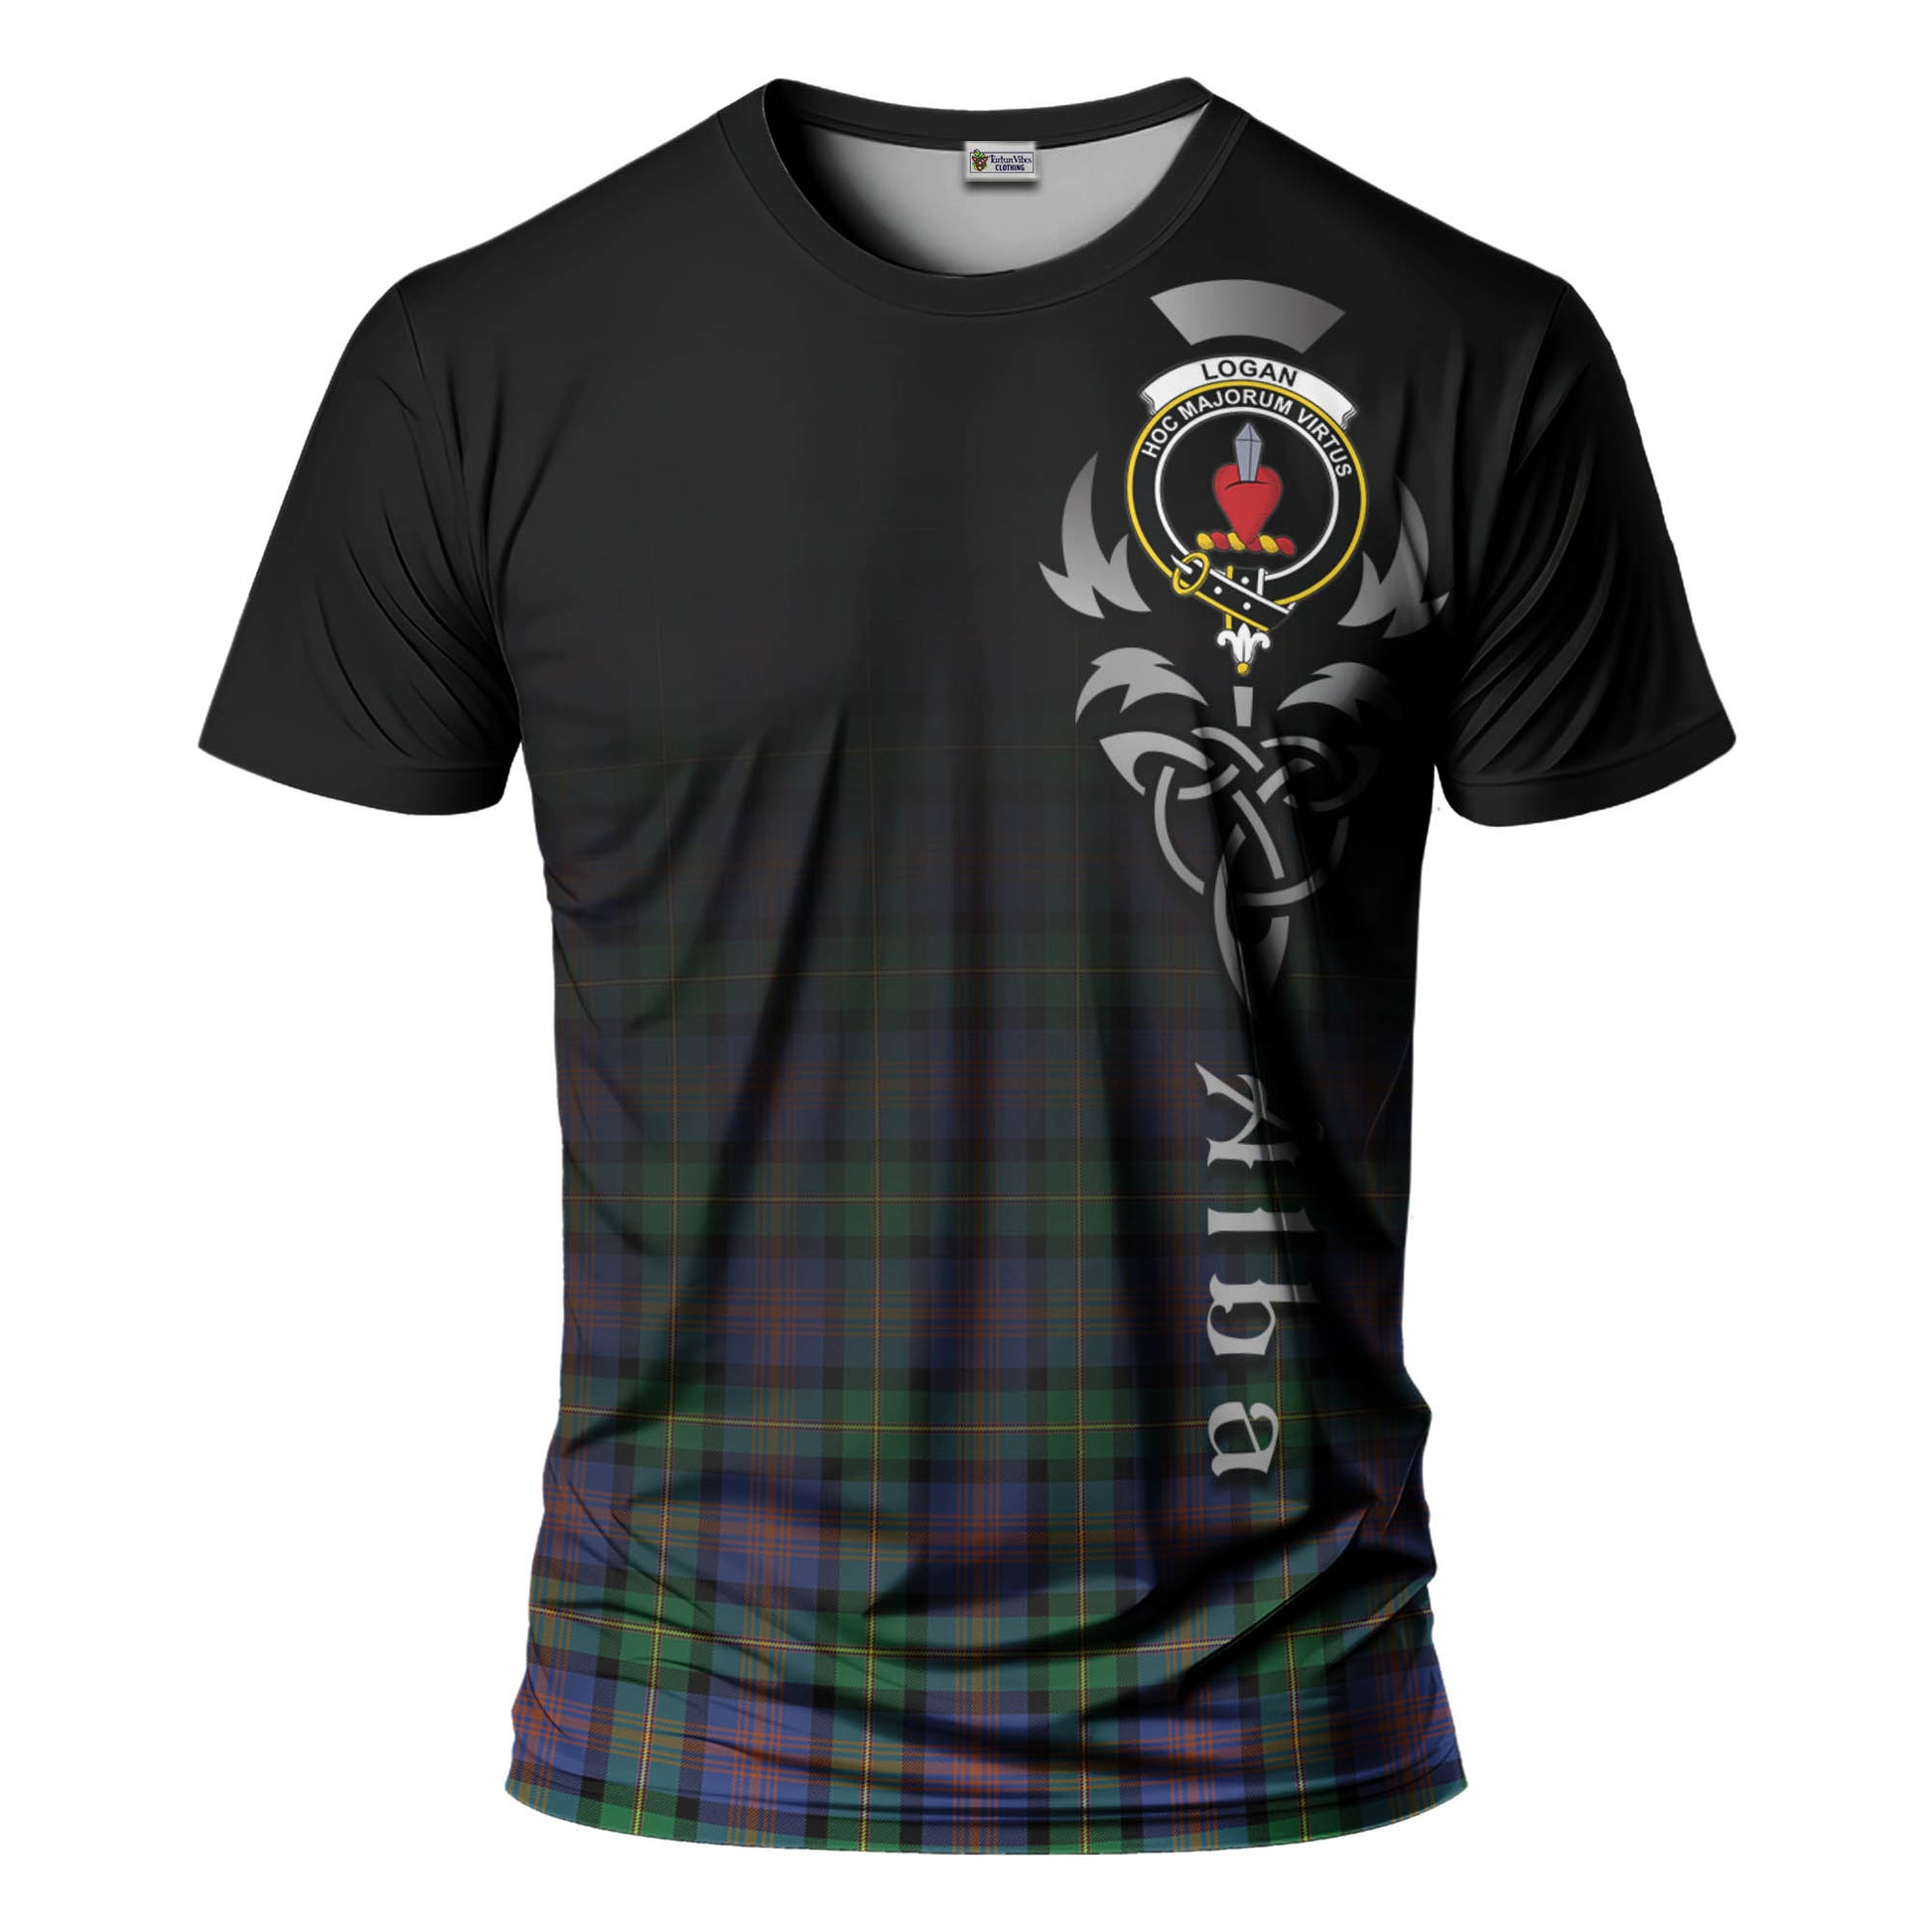 Tartan Vibes Clothing Logan Ancient Tartan T-Shirt Featuring Alba Gu Brath Family Crest Celtic Inspired